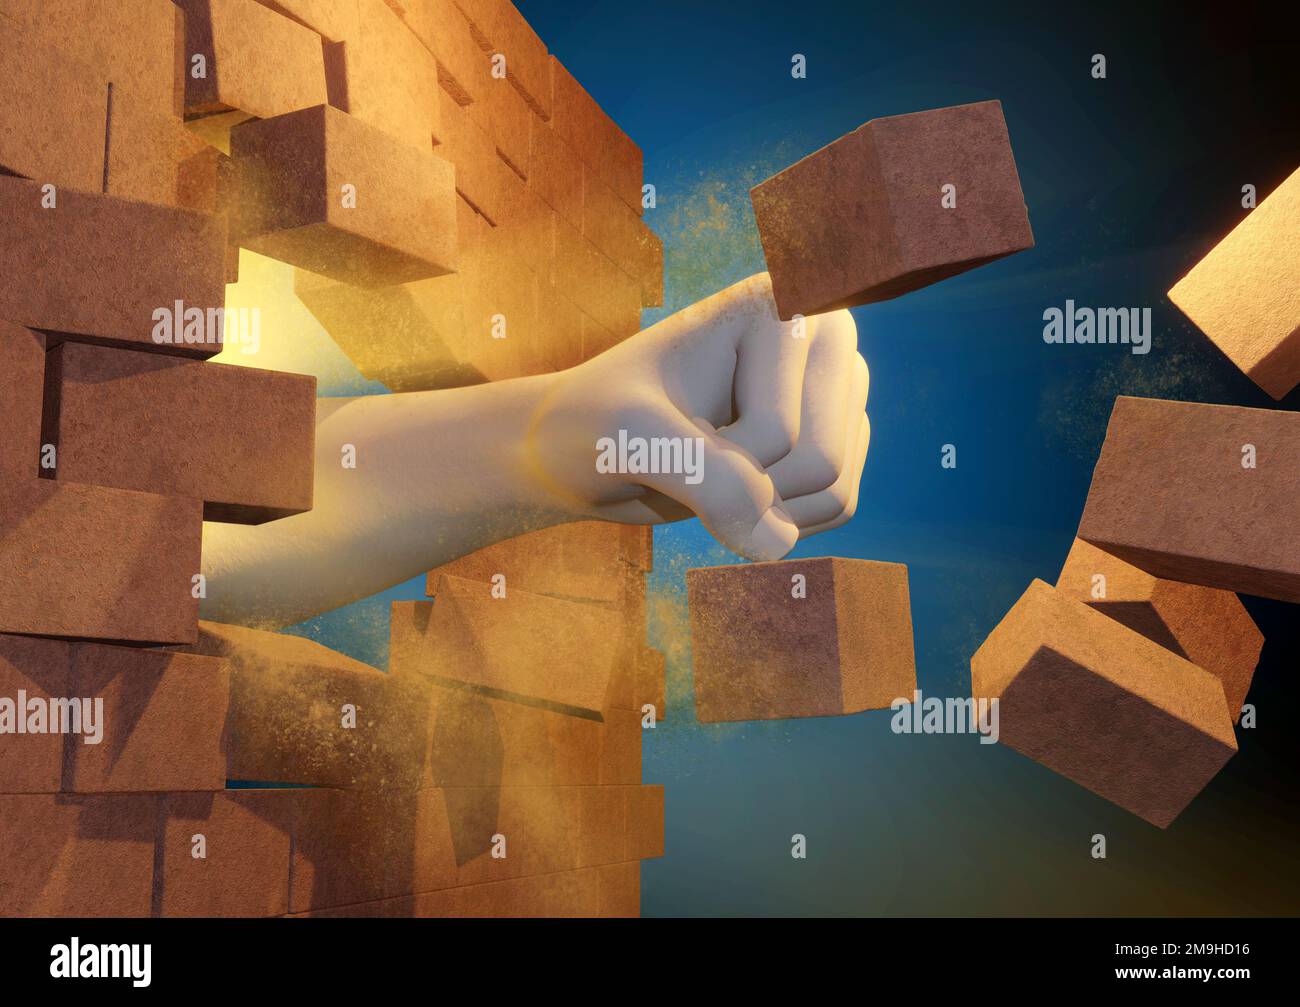 Punching through a brick wall. Digital illustration, 3D rendering. Stock Photo